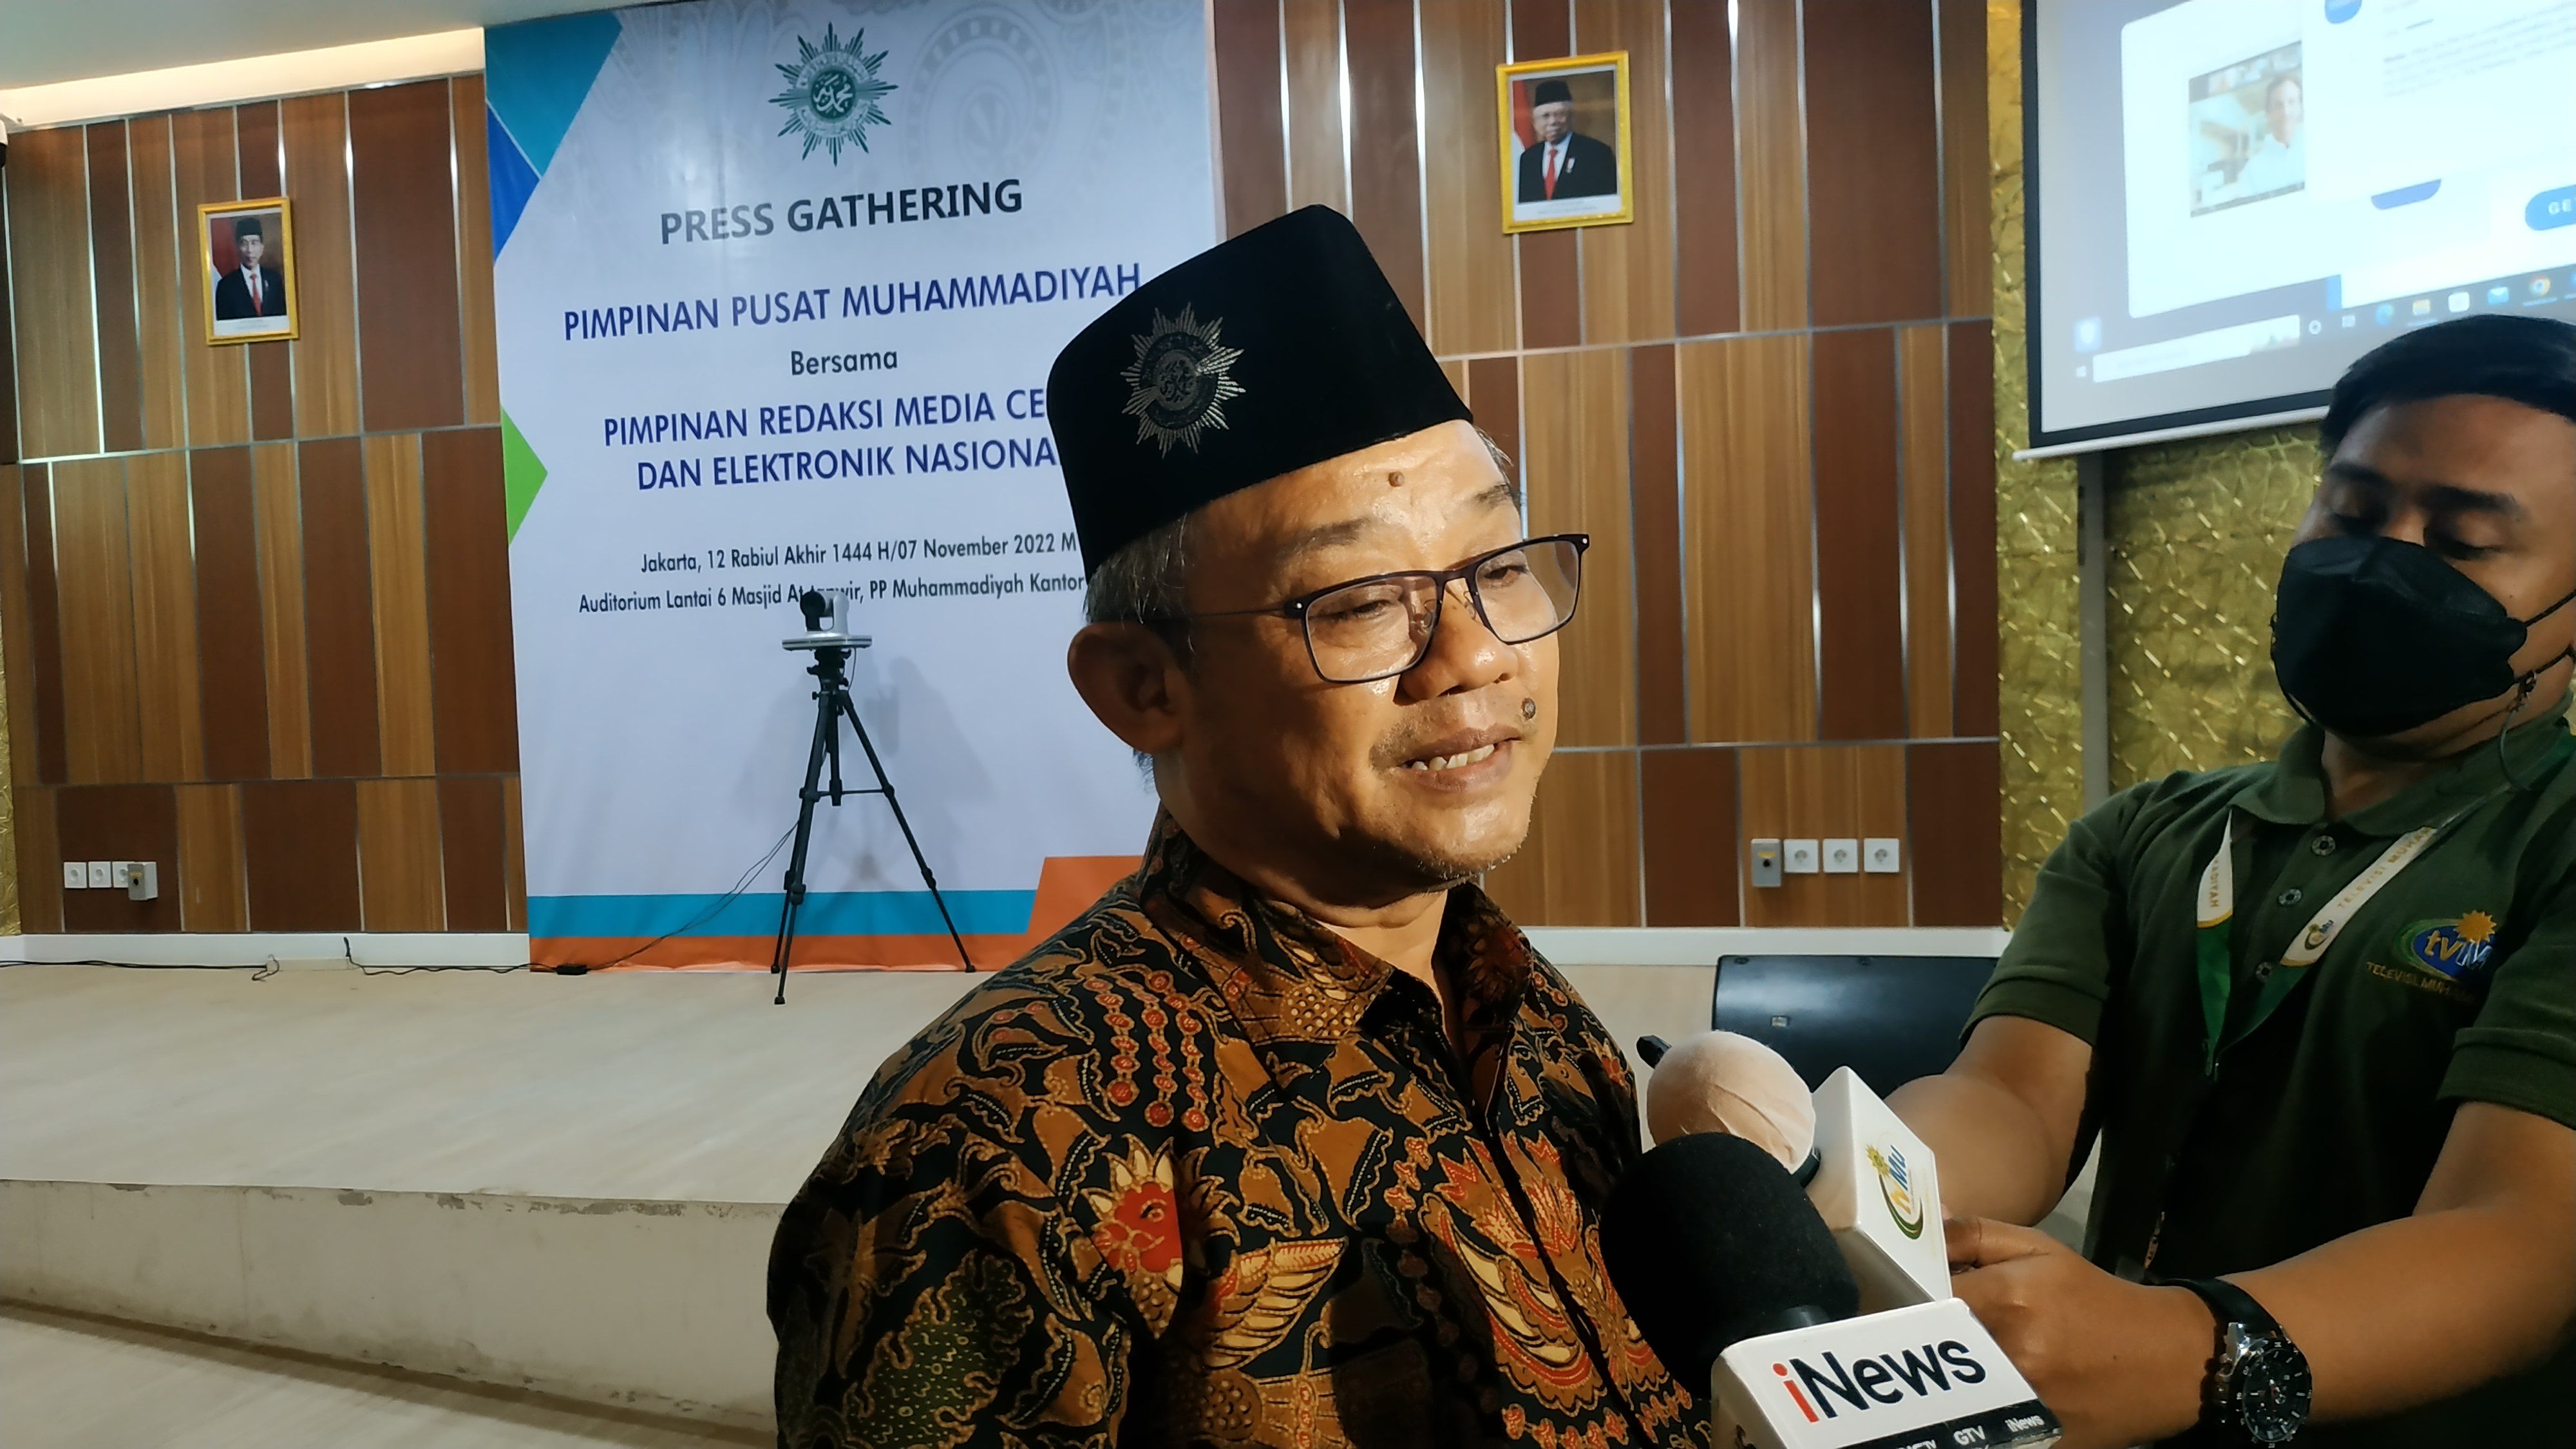 PP Muhammadiyah Desak Pemerintah Indonesia Proaktif Selesaikan Perang Hamas-Israel